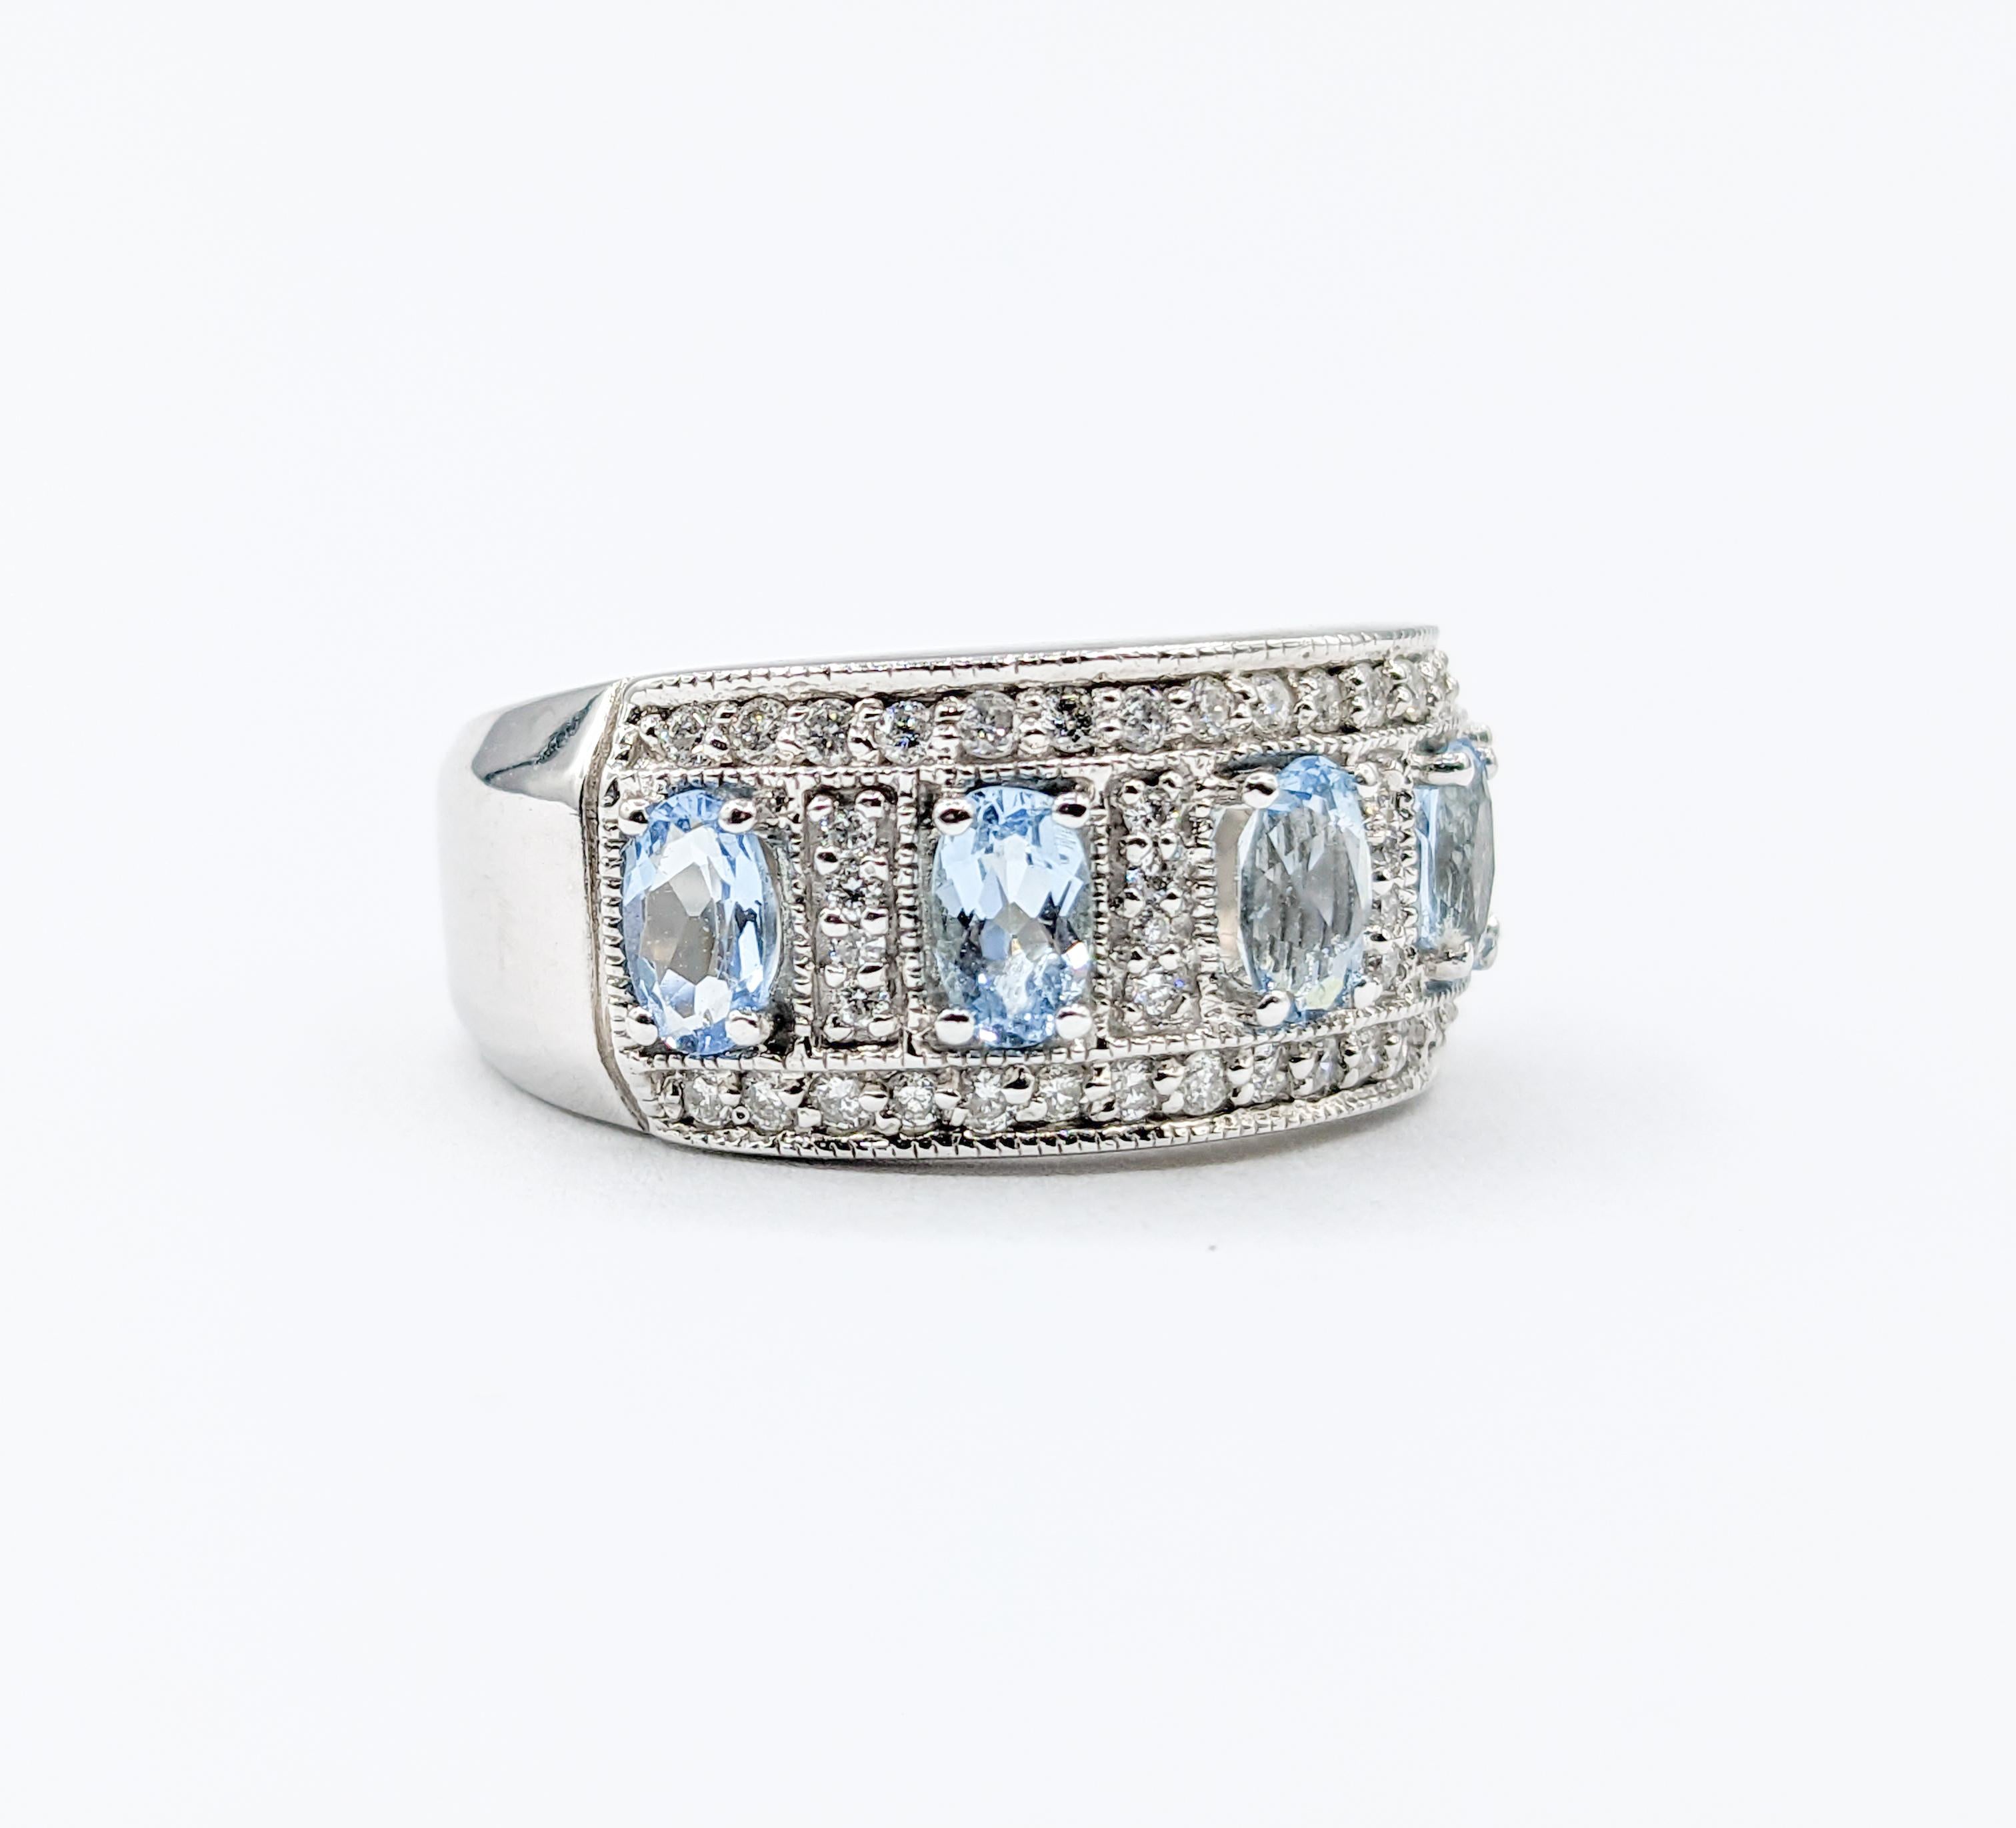  Fabulous Aquamarine & Diamond Wide Band Ring in White Gold 1